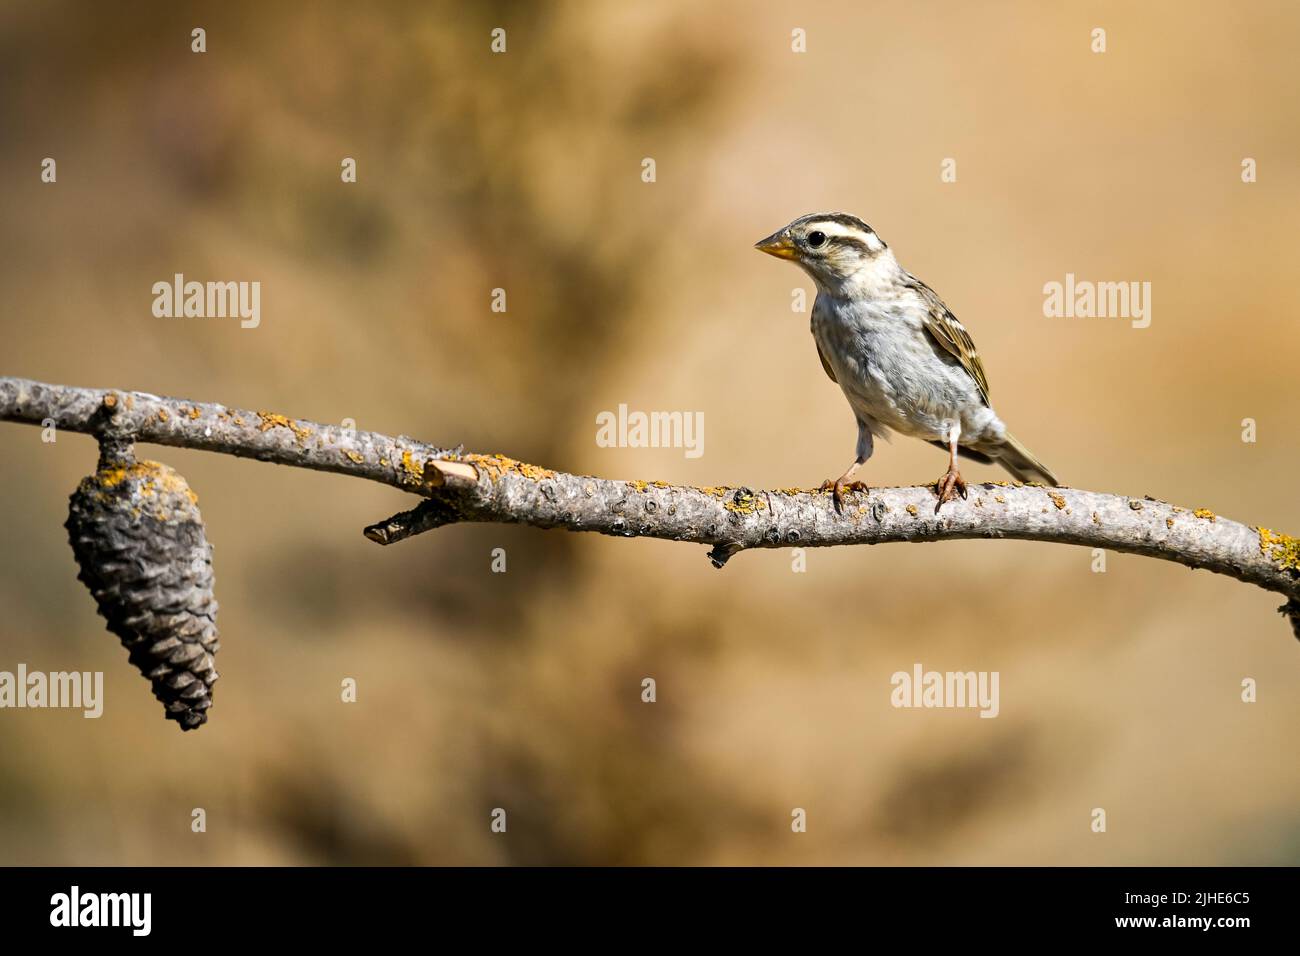 Gemeiner Fink oder Fringilla coelebs - kleiner Singvögel Stockfoto